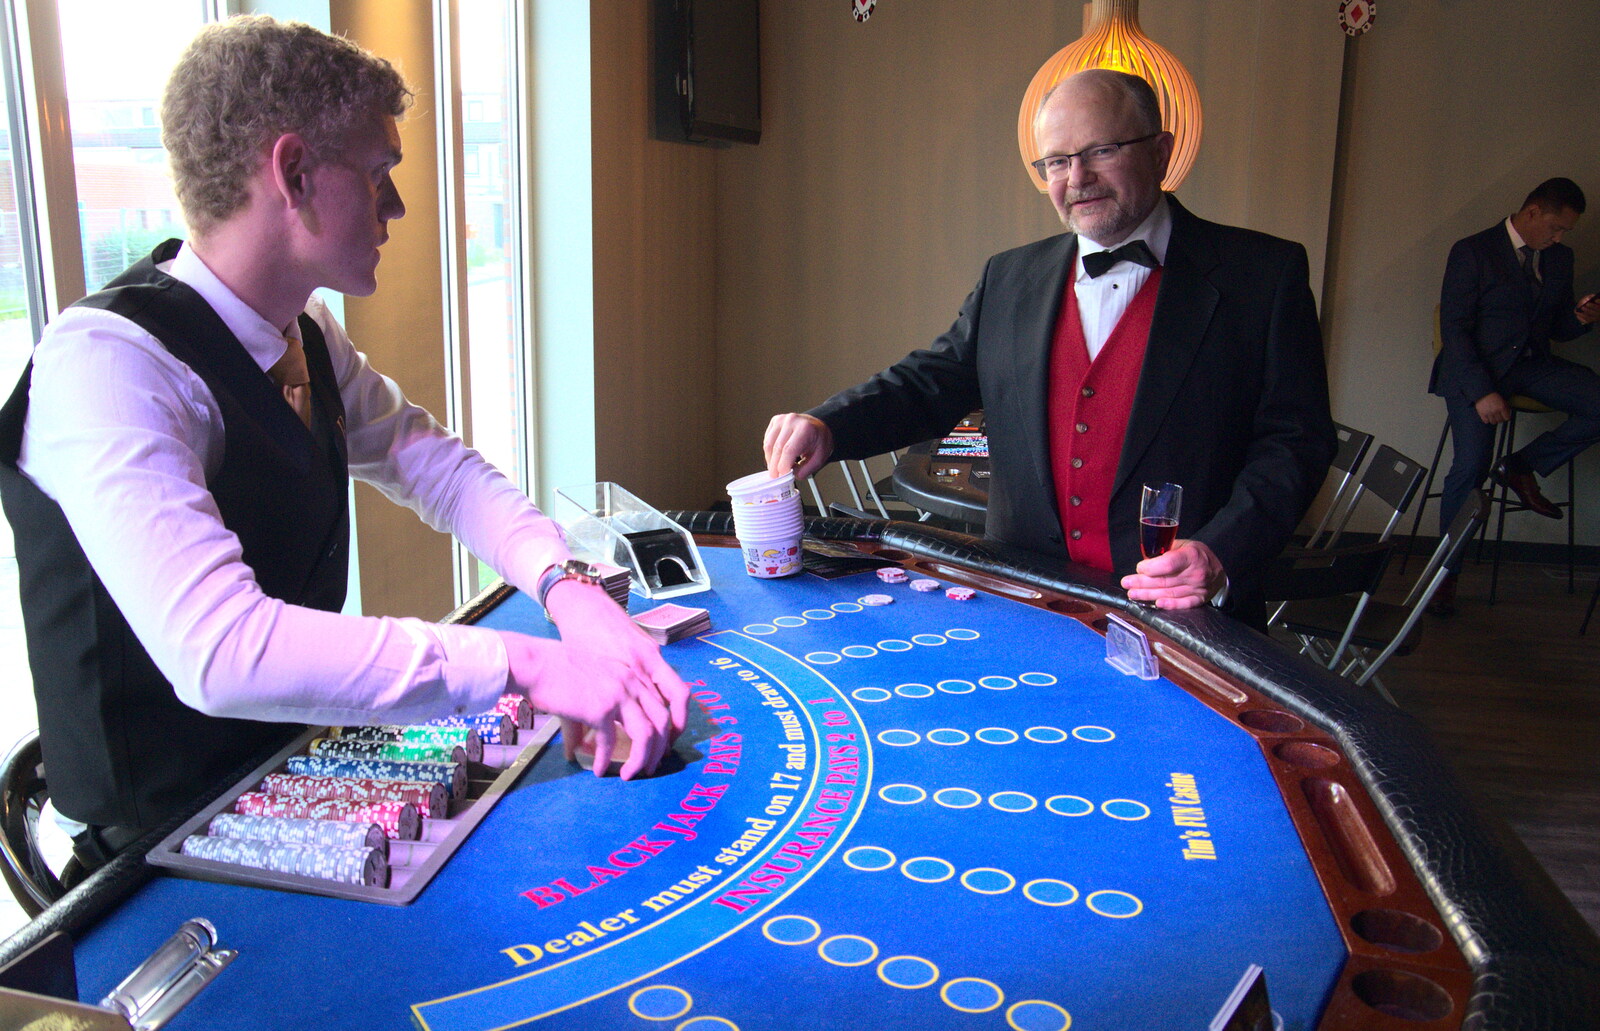 Hamish tries out the Blackjack table from Martin's James Bond 50th Birthday, Asperen, Gelderland, Netherlands - 9th June 2018